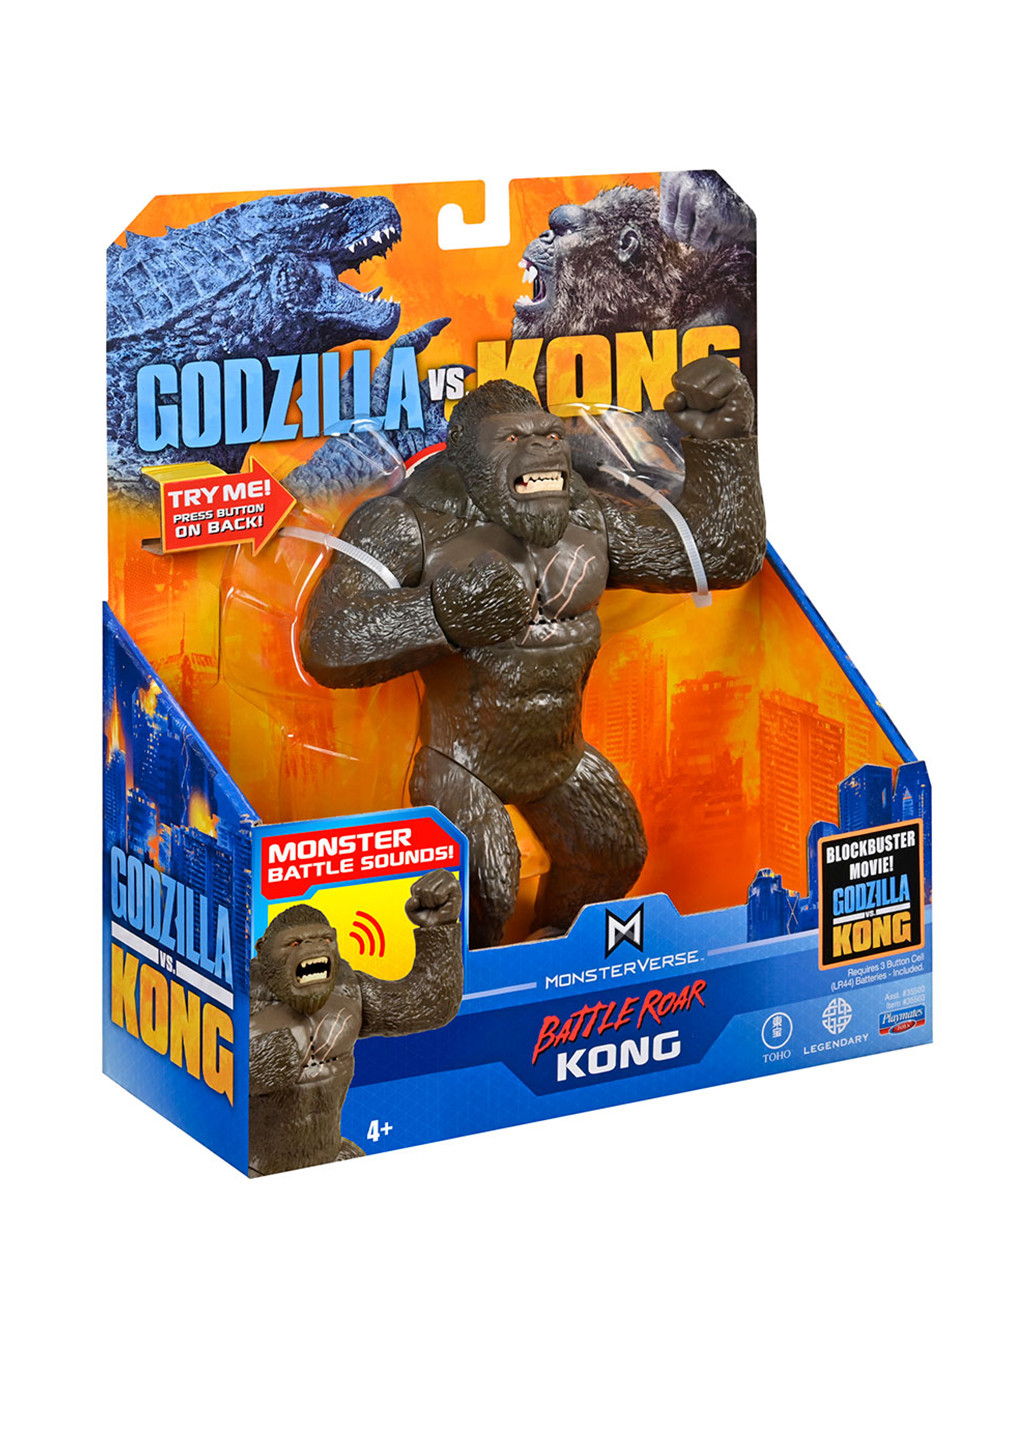 Фігурка Конг Делюкс, 17 см Godzilla vs. Kong (253483937)